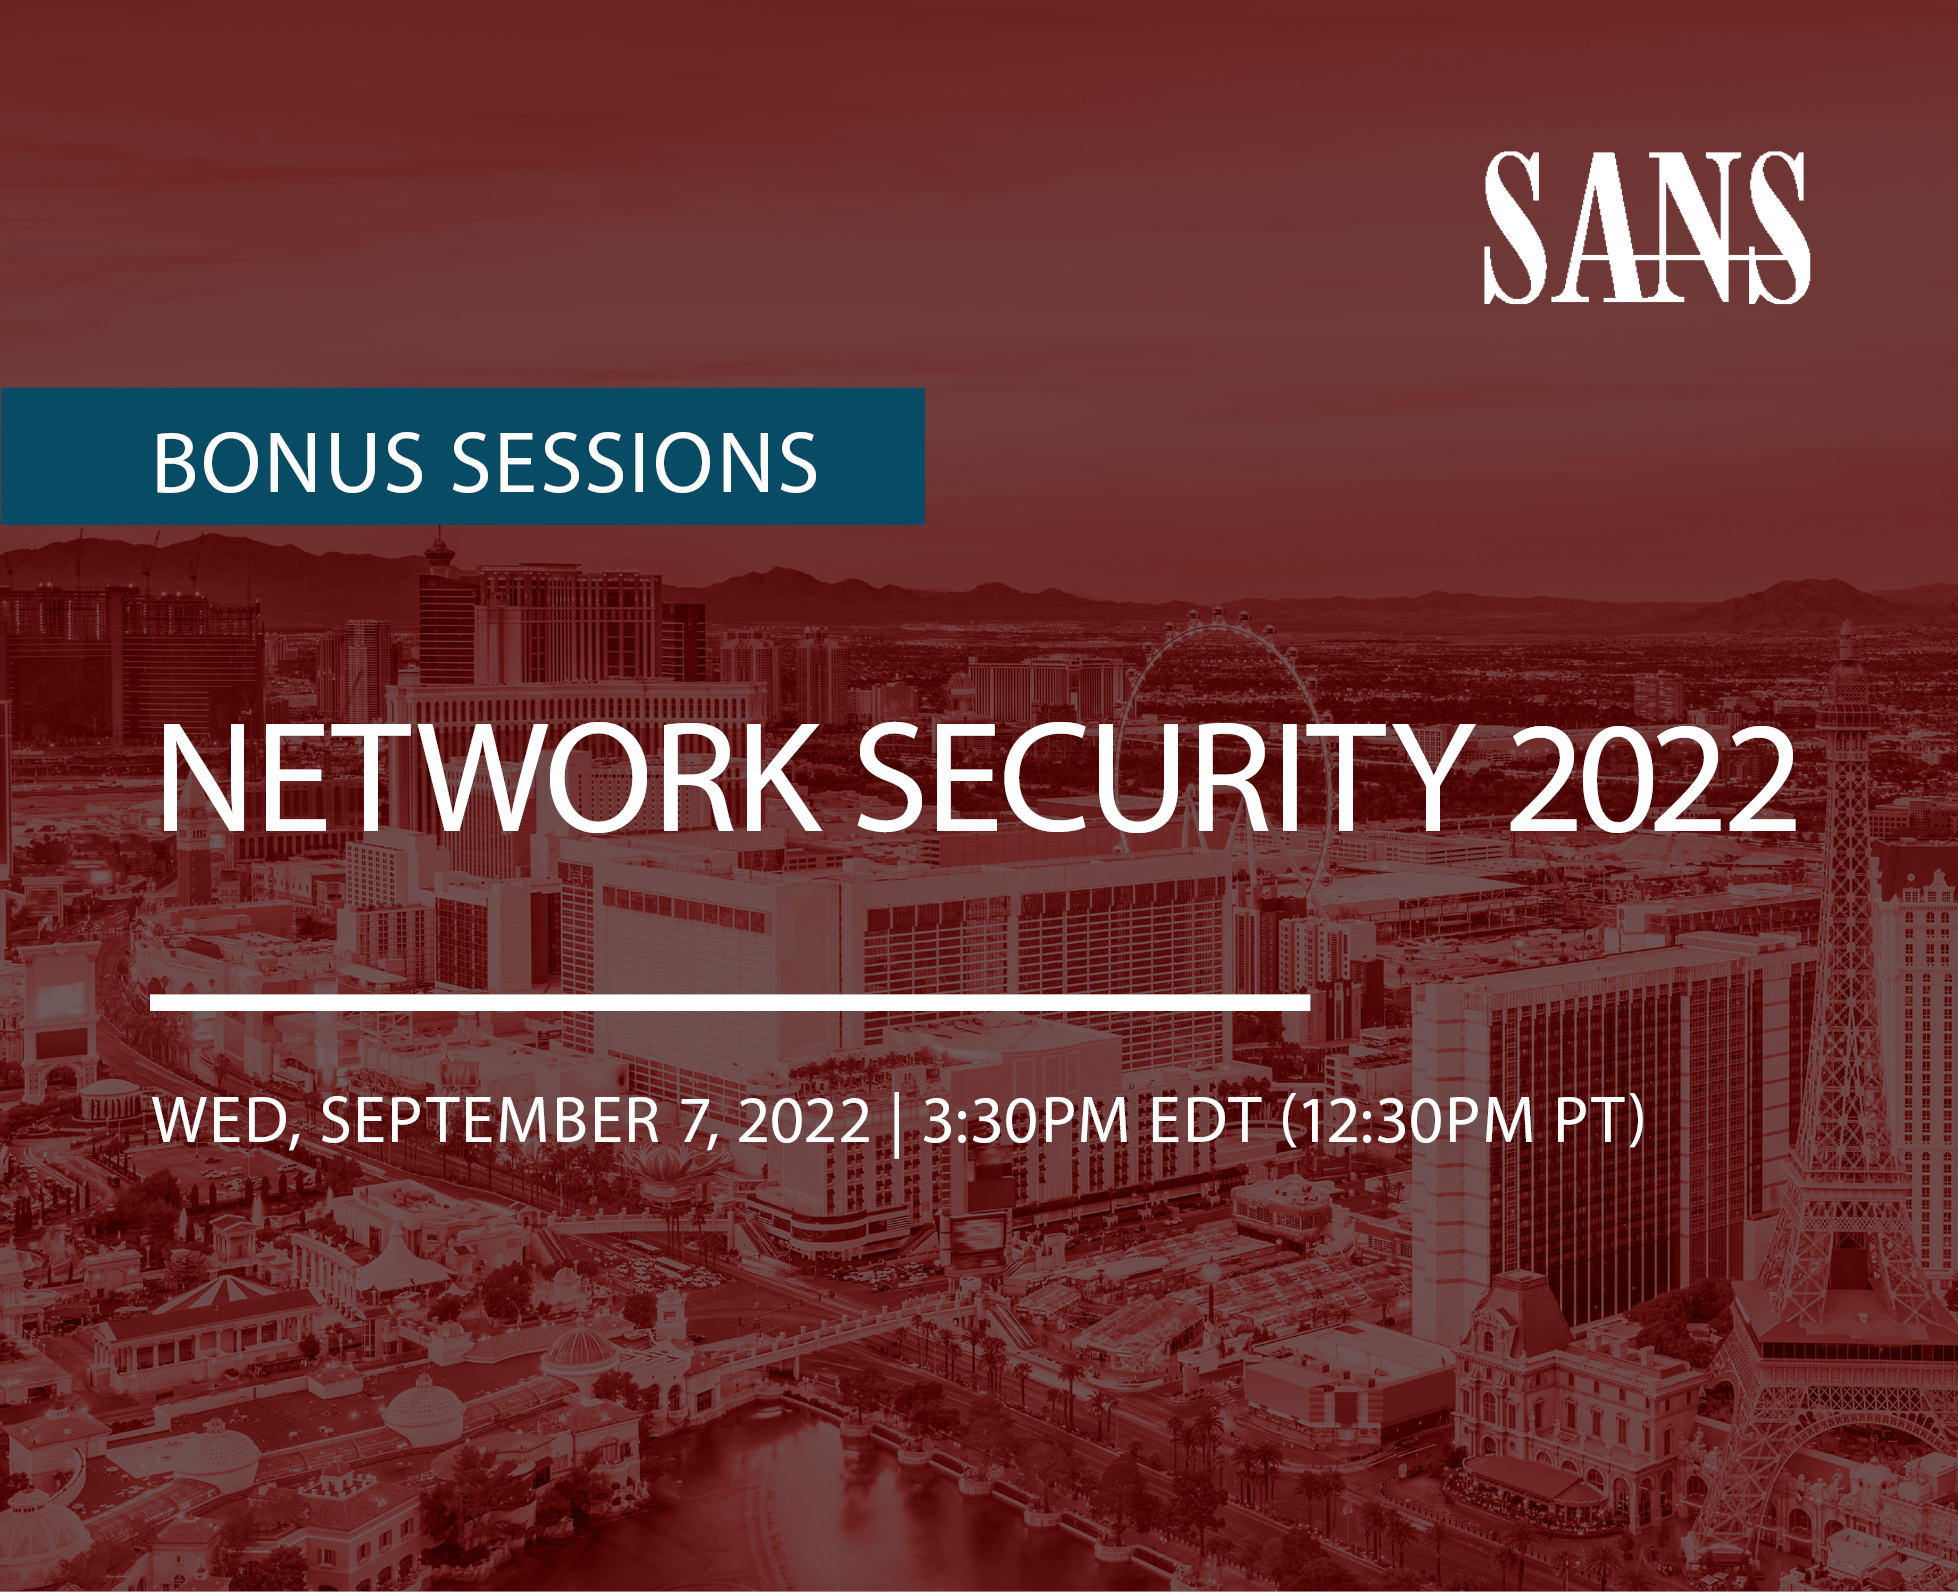 Network Security 2022: Bonus Sessions - Wednesday